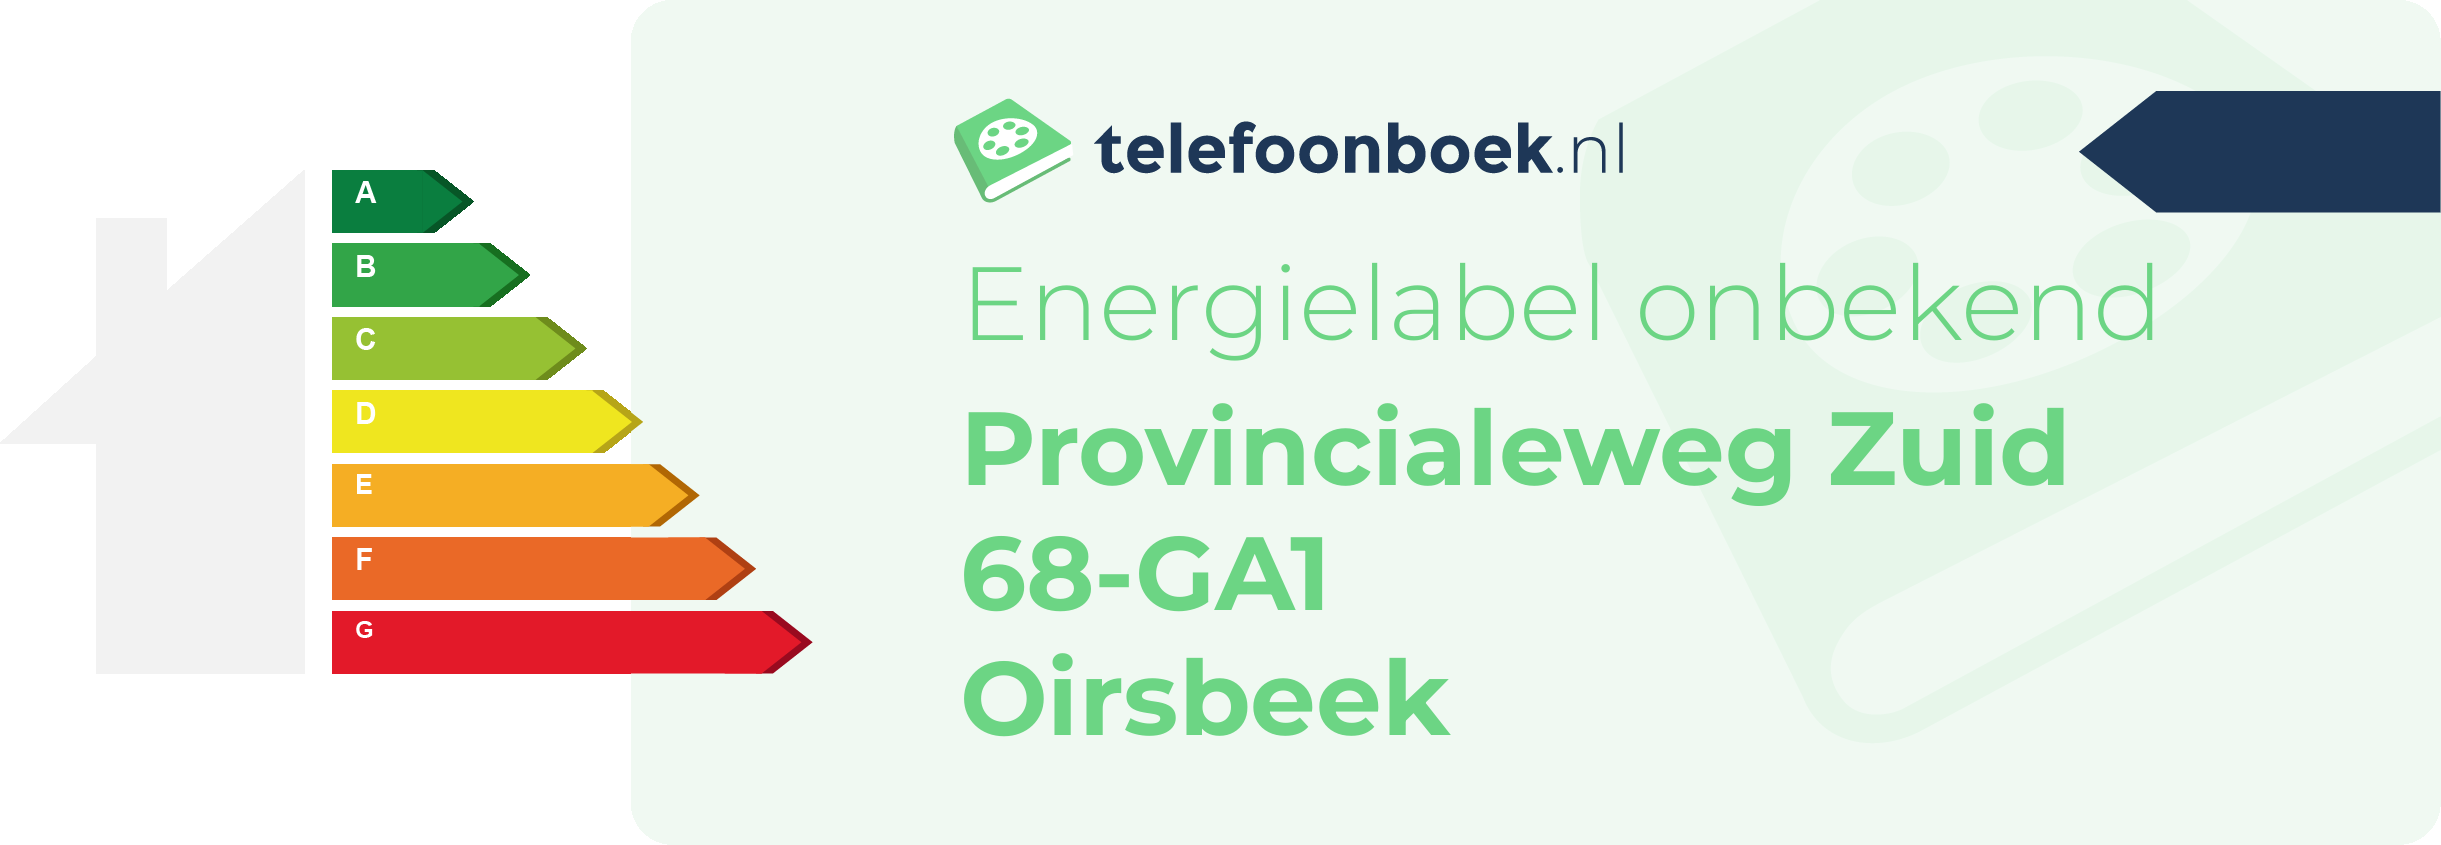 Energielabel Provincialeweg Zuid 68-GA1 Oirsbeek